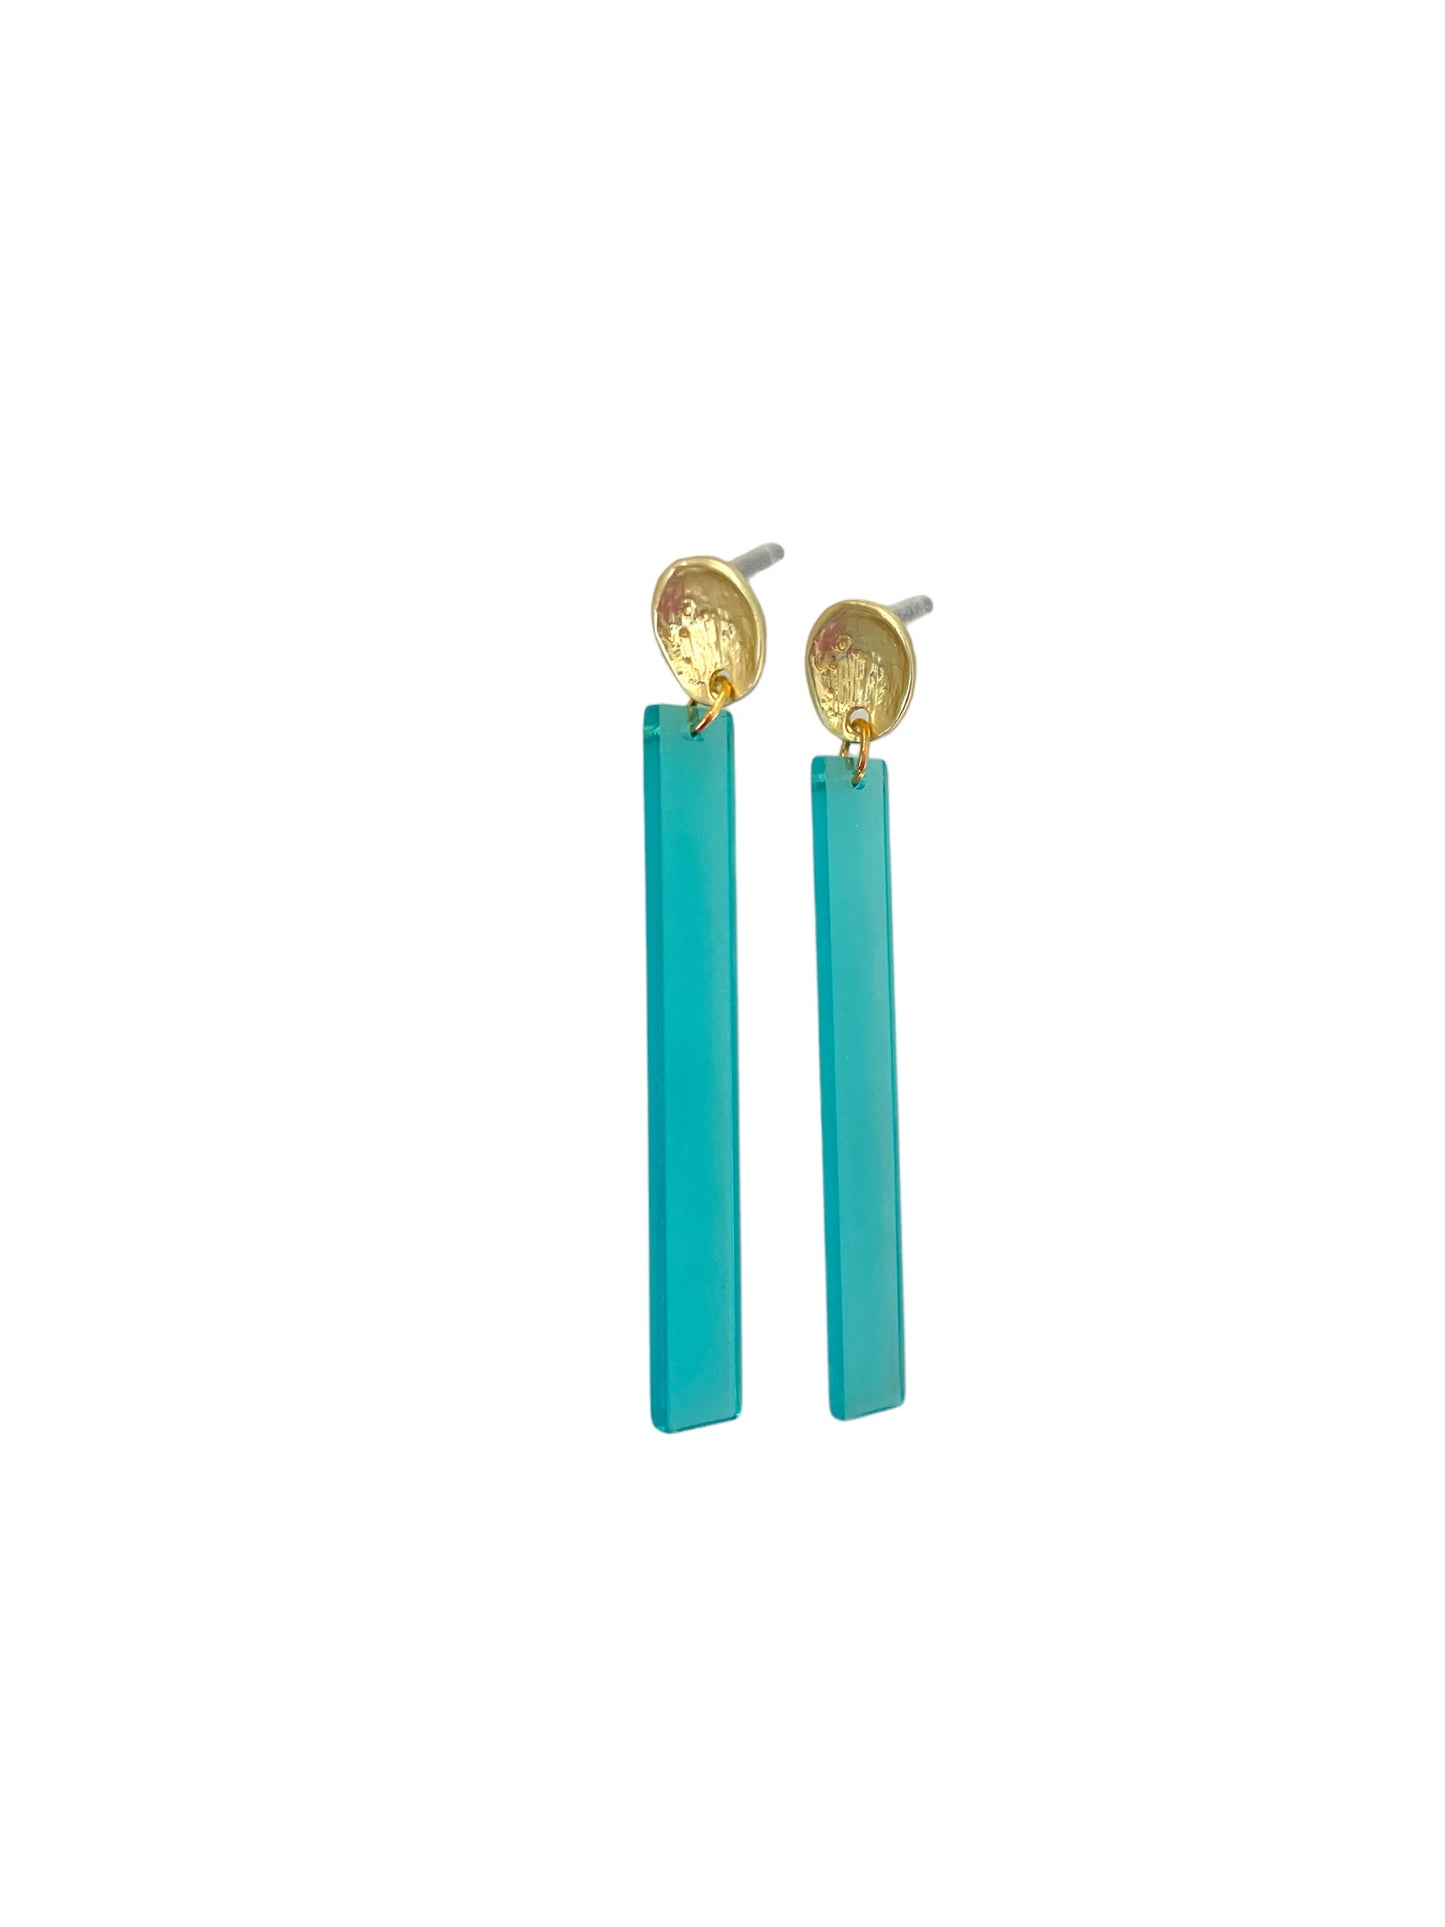 Clear Turquoise Bar Earrings